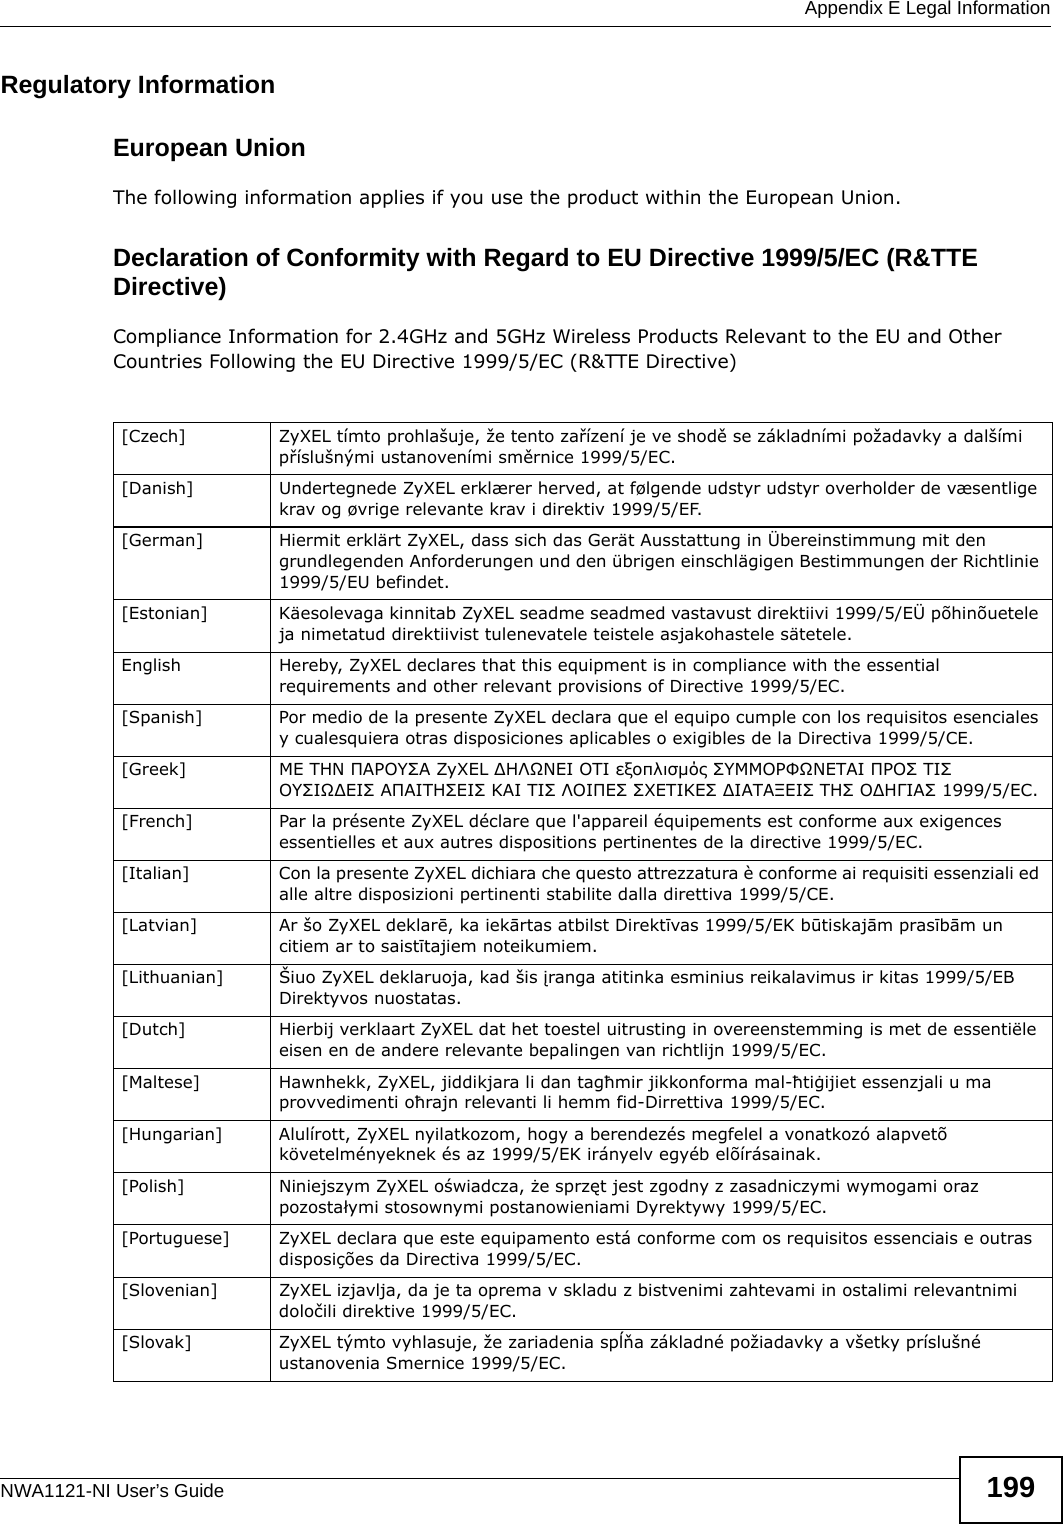  Appendix E Legal InformationNWA1121-NI User’s Guide 199Regulatory InformationEuropean UnionThe following information applies if you use the product within the European Union. Declaration of Conformity with Regard to EU Directive 1999/5/EC (R&amp;TTE Directive)Compliance Information for 2.4GHz and 5GHz Wireless Products Relevant to the EU and Other Countries Following the EU Directive 1999/5/EC (R&amp;TTE Directive) [Czech] ZyXEL tímto prohlašuje, že tento zařízení je ve shodě se základními požadavky a dalšími příslušnými ustanoveními směrnice 1999/5/EC.[Danish] Undertegnede ZyXEL erklærer herved, at følgende udstyr udstyr overholder de væsentlige krav og øvrige relevante krav i direktiv 1999/5/EF.[German] Hiermit erklärt ZyXEL, dass sich das Gerät Ausstattung in Übereinstimmung mit den grundlegenden Anforderungen und den übrigen einschlägigen Bestimmungen der Richtlinie 1999/5/EU befindet.[Estonian] Käesolevaga kinnitab ZyXEL seadme seadmed vastavust direktiivi 1999/5/EÜ põhinõuetele ja nimetatud direktiivist tulenevatele teistele asjakohastele sätetele.English Hereby, ZyXEL declares that this equipment is in compliance with the essential requirements and other relevant provisions of Directive 1999/5/EC.[Spanish] Por medio de la presente ZyXEL declara que el equipo cumple con los requisitos esenciales y cualesquiera otras disposiciones aplicables o exigibles de la Directiva 1999/5/CE.[Greek] ΜΕ ΤΗΝ ΠΑΡΟΥΣΑ ZyXEL ΔΗΛΩΝΕΙ ΟΤΙ εξοπλισμός ΣΥΜΜΟΡΦΩΝΕΤΑΙ ΠΡΟΣ ΤΙΣ ΟΥΣΙΩΔΕΙΣ ΑΠΑΙΤΗΣΕΙΣ ΚΑΙ ΤΙΣ ΛΟΙΠΕΣ ΣΧΕΤΙΚΕΣ ΔΙΑΤΑΞΕΙΣ ΤΗΣ ΟΔΗΓΙΑΣ 1999/5/ΕC.[French] Par la présente ZyXEL déclare que l&apos;appareil équipements est conforme aux exigences essentielles et aux autres dispositions pertinentes de la directive 1999/5/EC.[Italian] Con la presente ZyXEL dichiara che questo attrezzatura è conforme ai requisiti essenziali ed alle altre disposizioni pertinenti stabilite dalla direttiva 1999/5/CE.[Latvian] Ar šo ZyXEL deklarē, ka iekārtas atbilst Direktīvas 1999/5/EK būtiskajām prasībām un citiem ar to saistītajiem noteikumiem.[Lithuanian]  Šiuo ZyXEL deklaruoja, kad šis įranga atitinka esminius reikalavimus ir kitas 1999/5/EB Direktyvos nuostatas.[Dutch] Hierbij verklaart ZyXEL dat het toestel uitrusting in overeenstemming is met de essentiële eisen en de andere relevante bepalingen van richtlijn 1999/5/EC.[Maltese] Hawnhekk, ZyXEL, jiddikjara li dan tagħmir jikkonforma mal-ħtiġijiet essenzjali u ma provvedimenti oħrajn relevanti li hemm fid-Dirrettiva 1999/5/EC.[Hungarian] Alulírott, ZyXEL nyilatkozom, hogy a berendezés megfelel a vonatkozó alapvetõ követelményeknek és az 1999/5/EK irányelv egyéb elõírásainak.[Polish] Niniejszym ZyXEL oświadcza, że sprzęt jest zgodny z zasadniczymi wymogami oraz pozostałymi stosownymi postanowieniami Dyrektywy 1999/5/EC.[Portuguese] ZyXEL declara que este equipamento está conforme com os requisitos essenciais e outras disposições da Directiva 1999/5/EC.[Slovenian] ZyXEL izjavlja, da je ta oprema v skladu z bistvenimi zahtevami in ostalimi relevantnimi določili direktive 1999/5/EC.[Slovak] ZyXEL týmto vyhlasuje, že zariadenia spĺňa základné požiadavky a všetky príslušné ustanovenia Smernice 1999/5/EC.